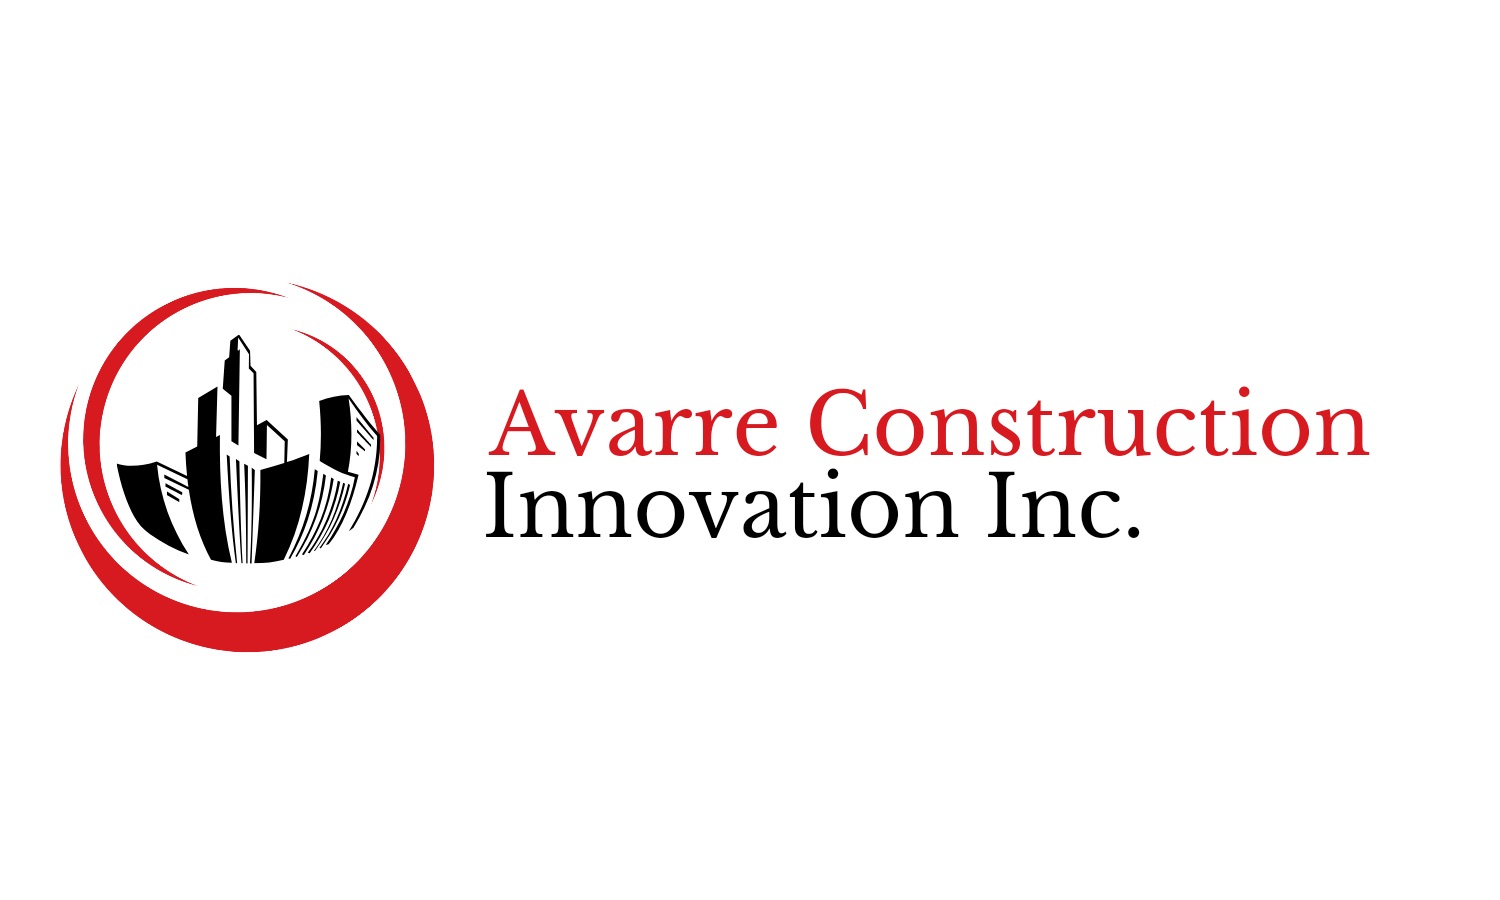 Avarre Construction Innovation Inc